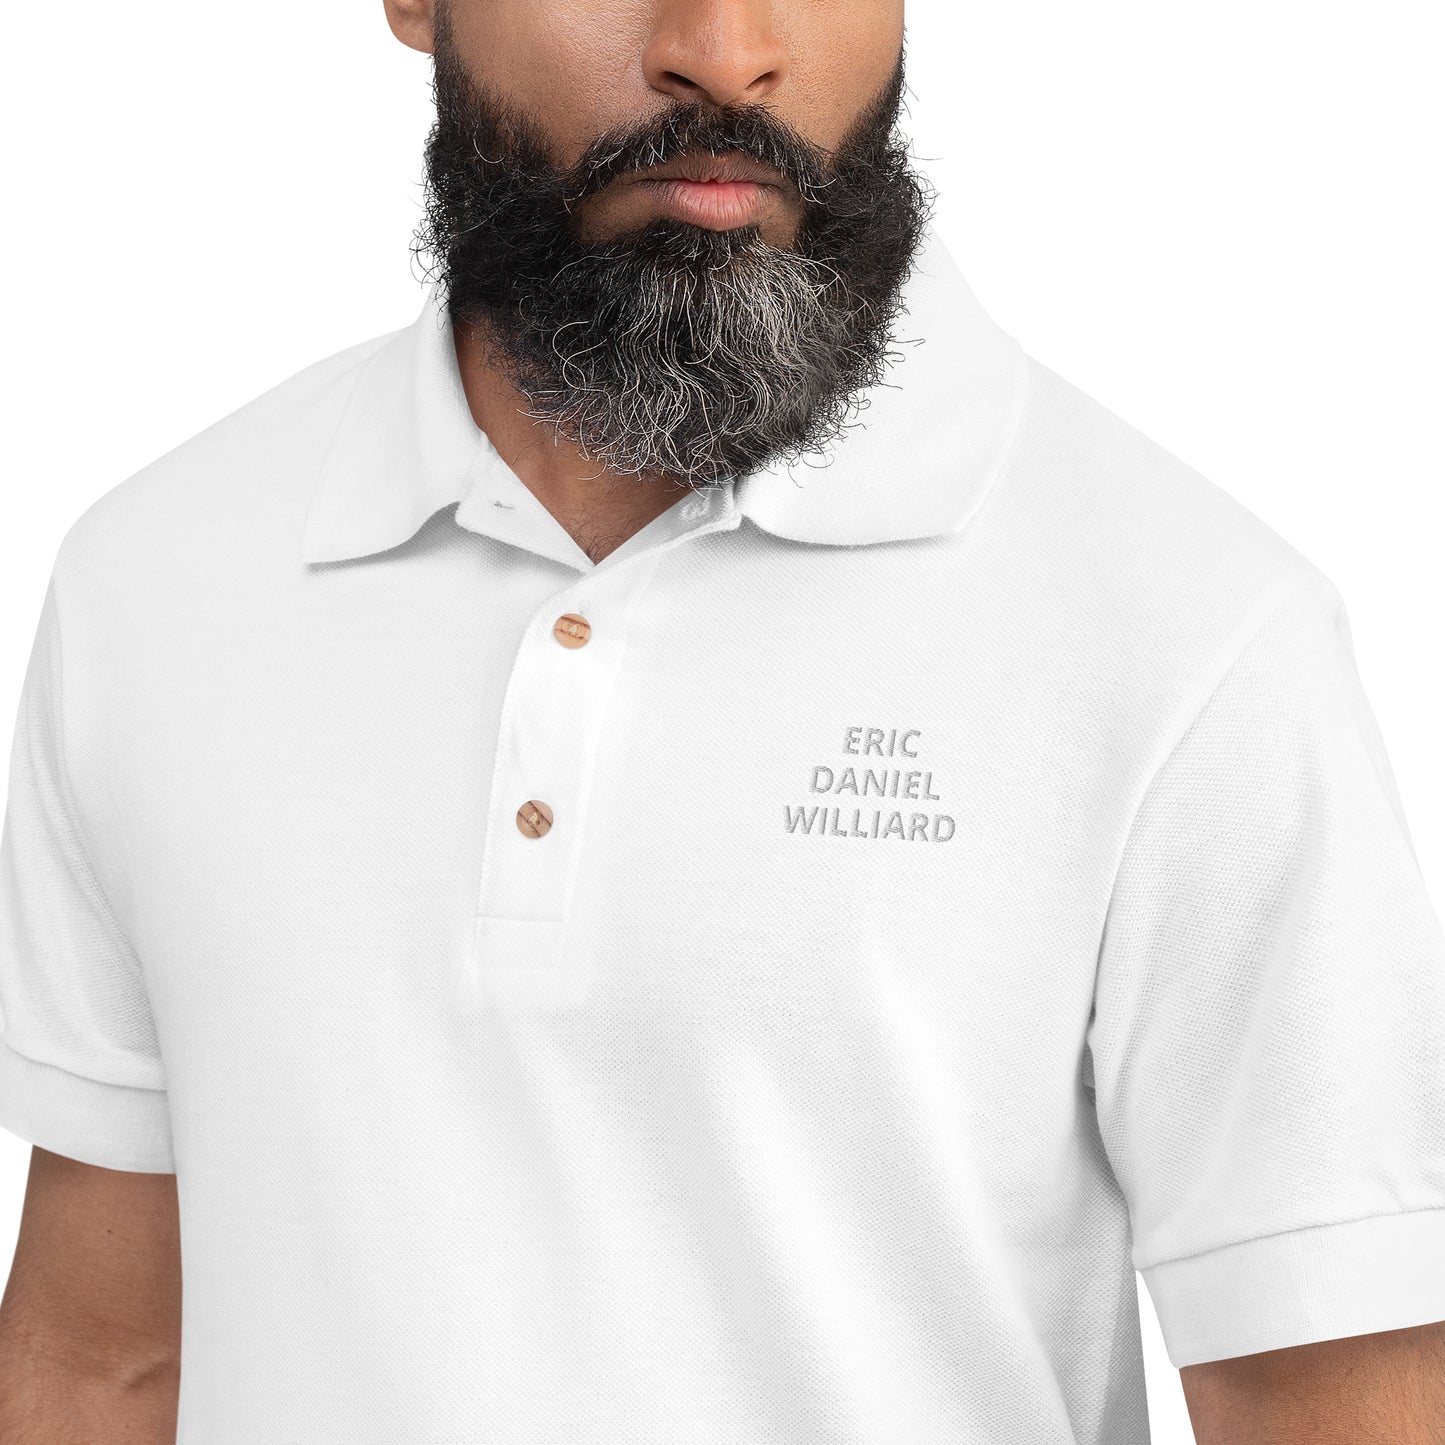 EDW Embroidered Polo Shirt